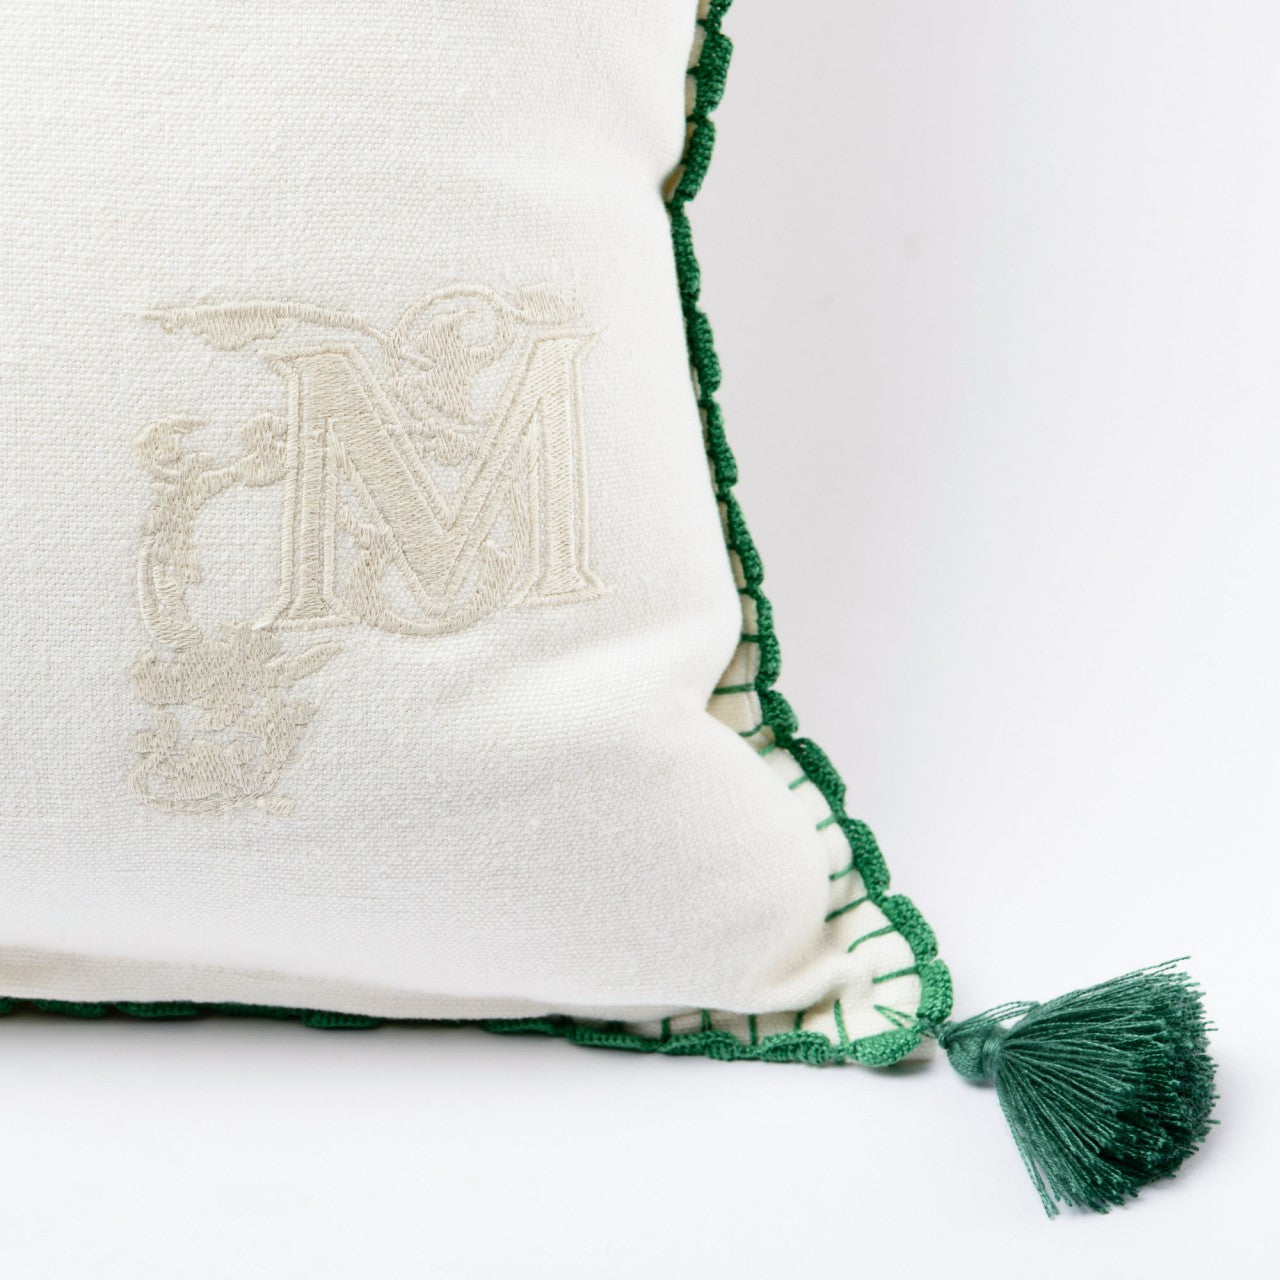 TRANSSILVANIAE FLORILEGIUM Linen Embroidered Cushion_Cushions_Mindthegap